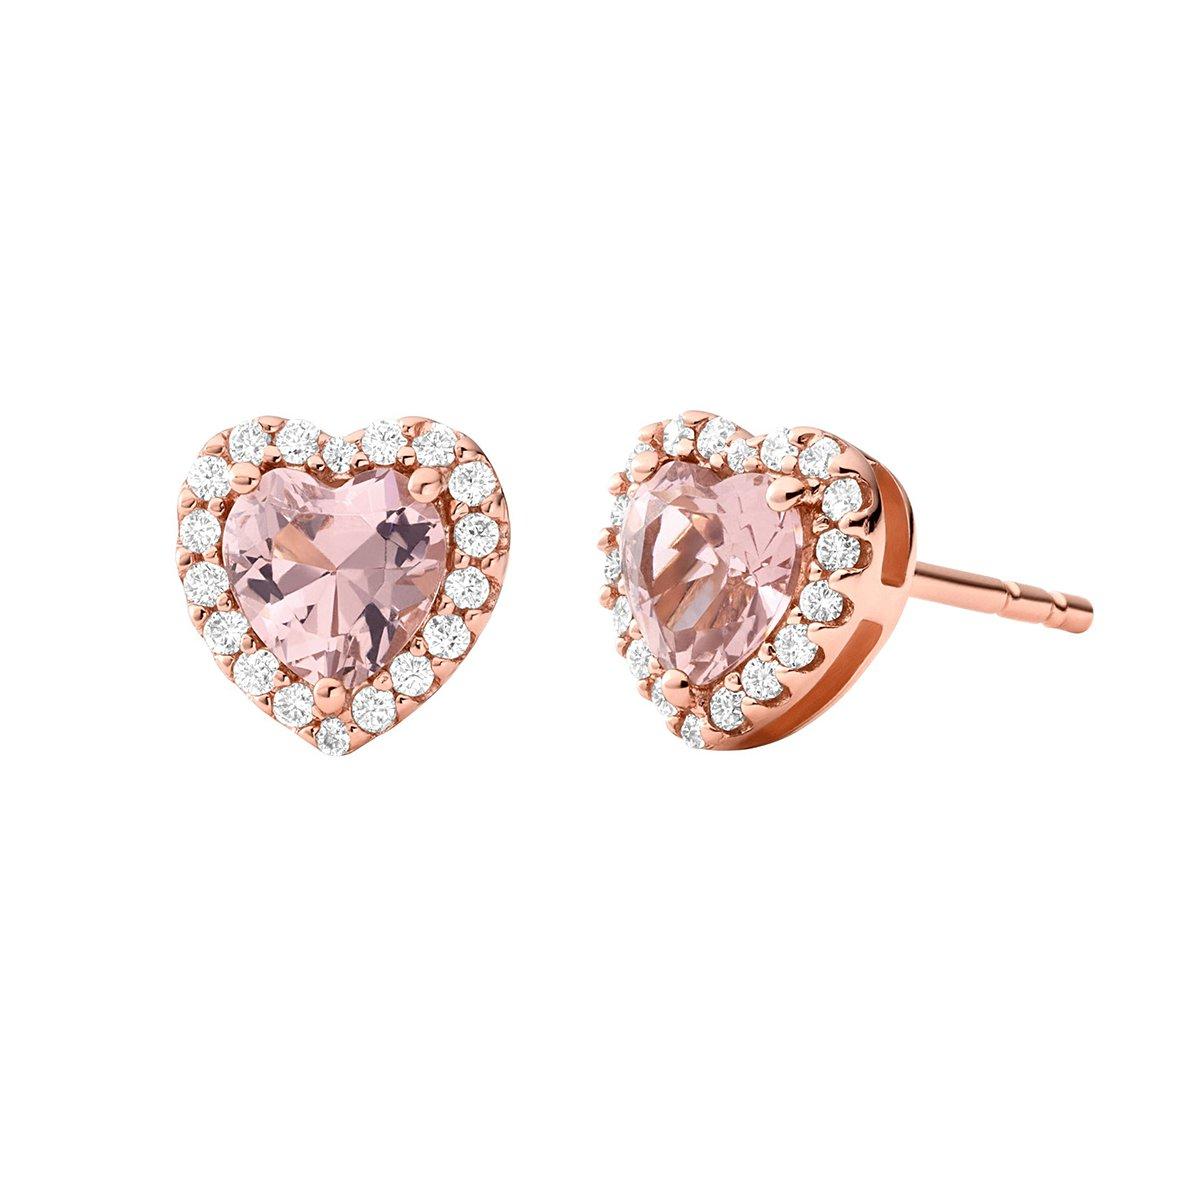 Michael Kors Jewellery | Earrings, Necklaces & More | Beaverbrooks